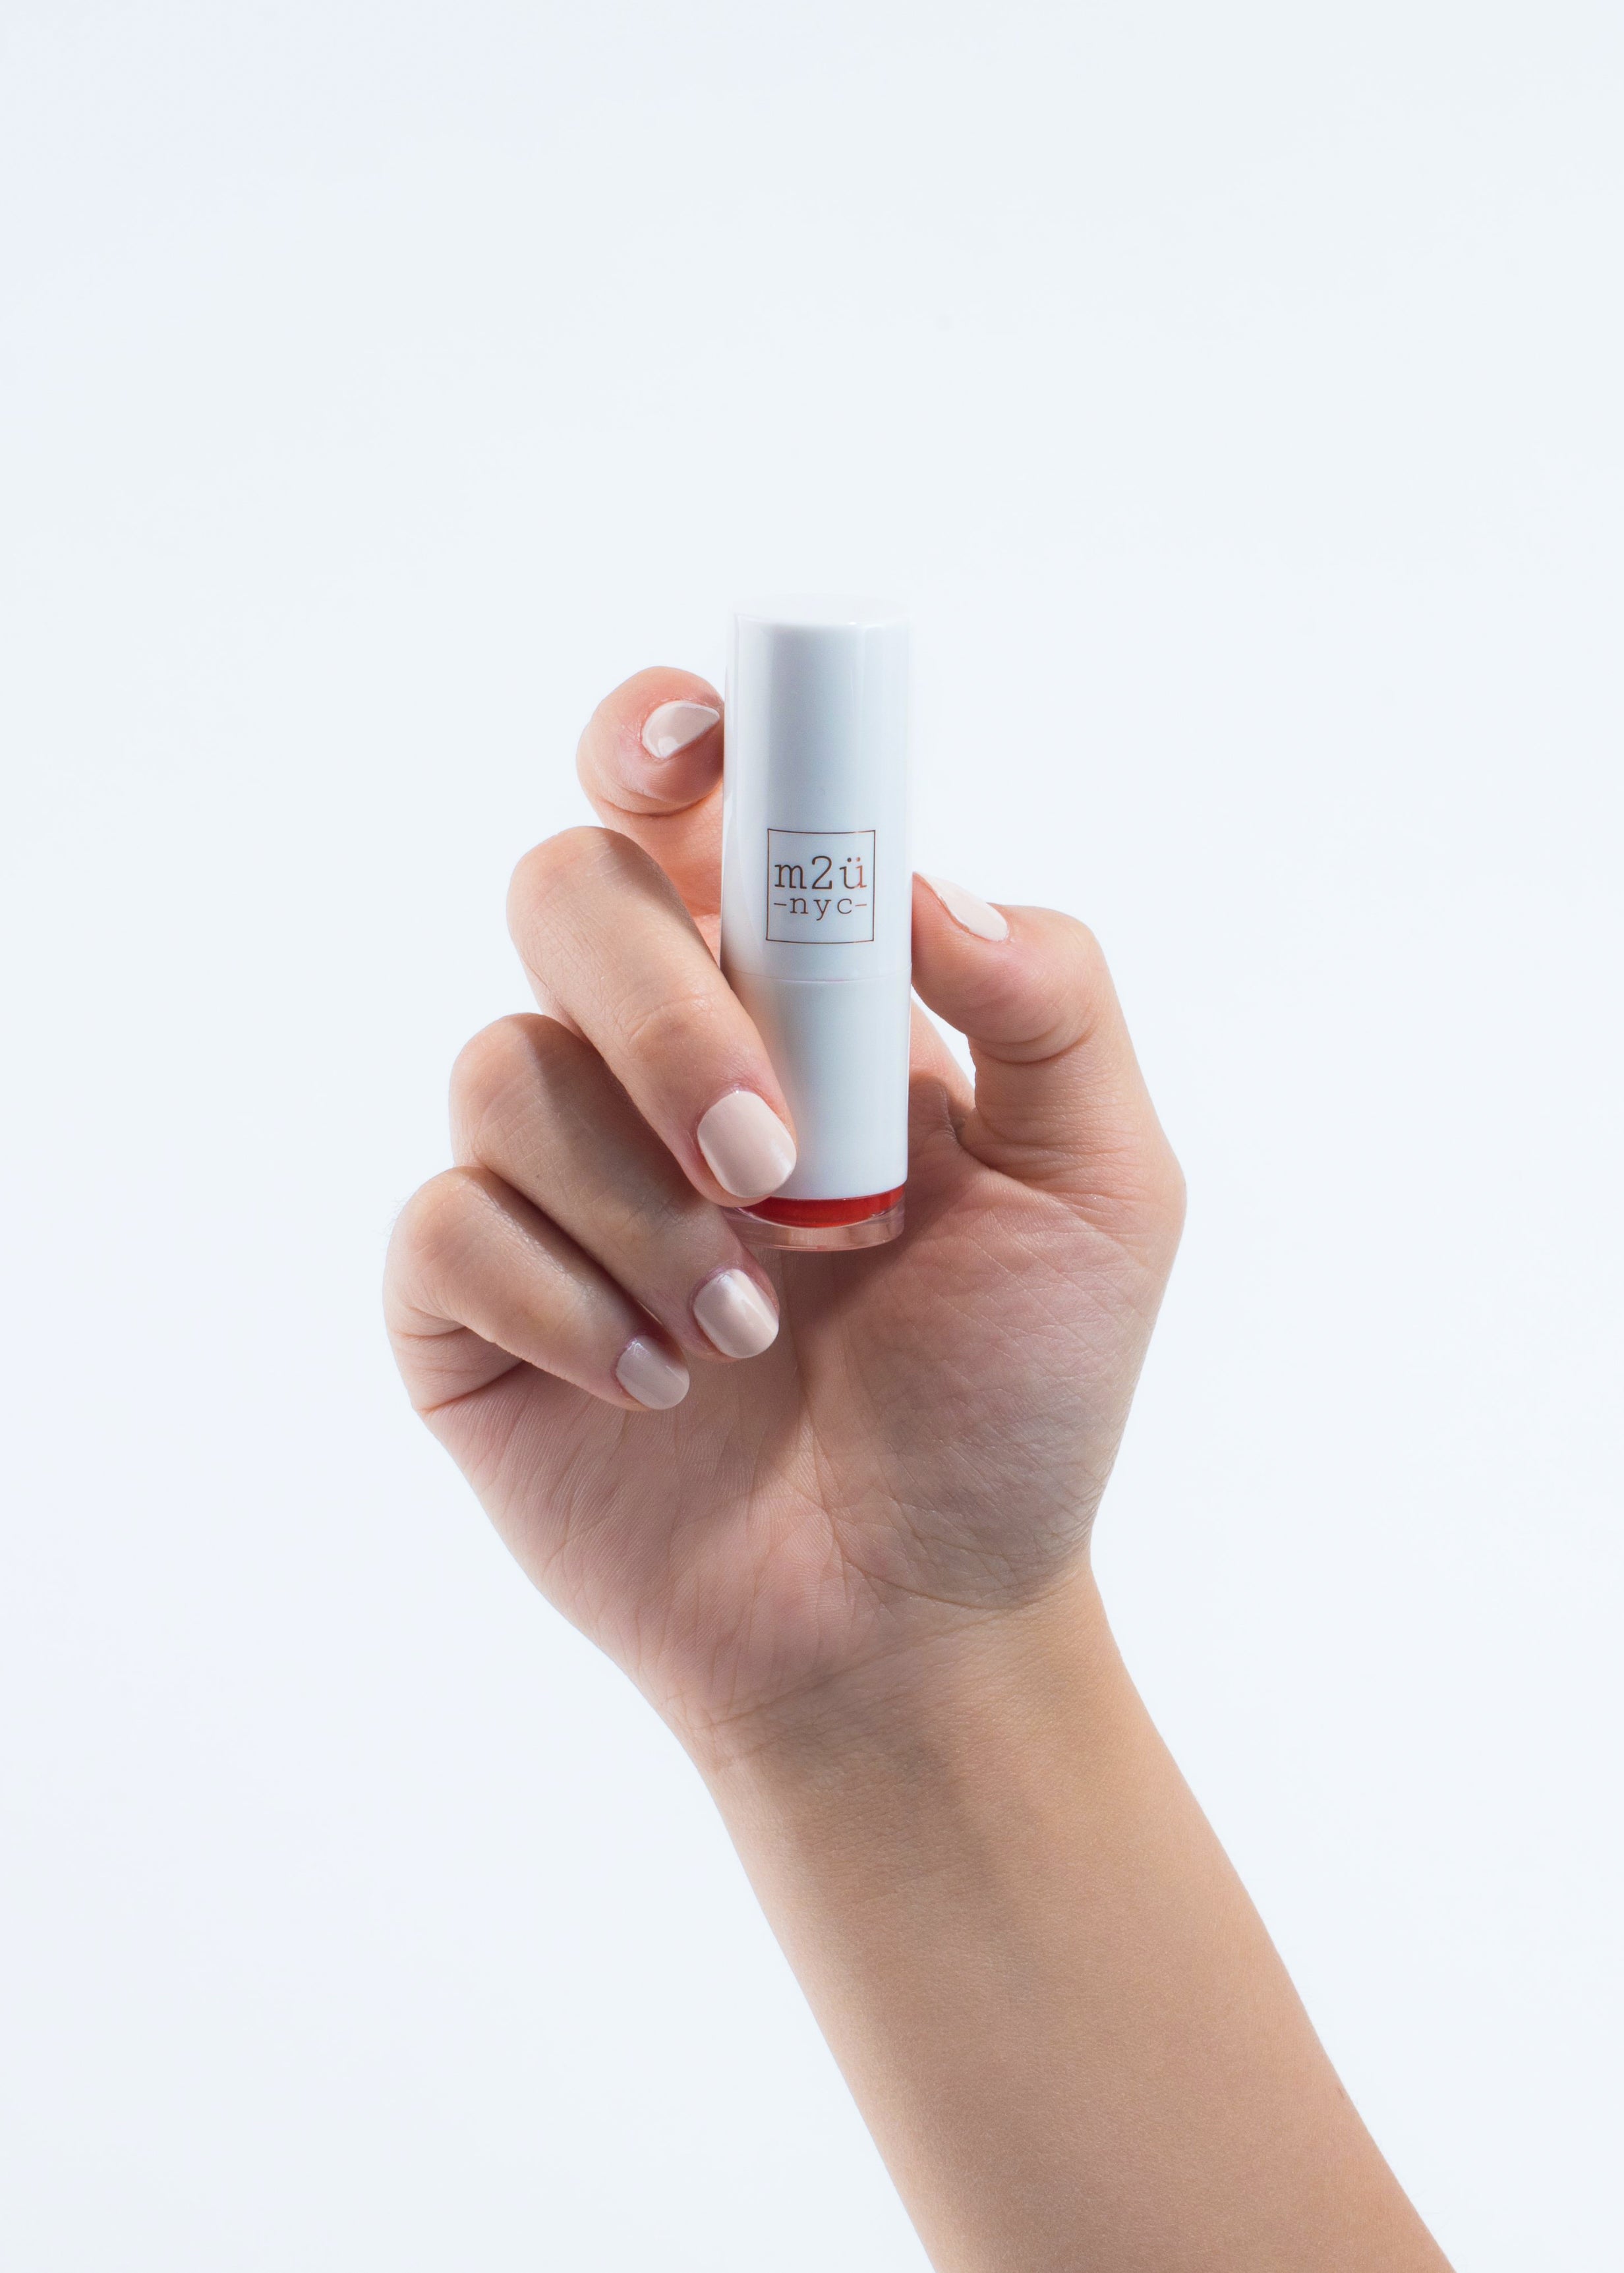 hand holding a vegan, cruelty free moisturizing lipstick in white packaging